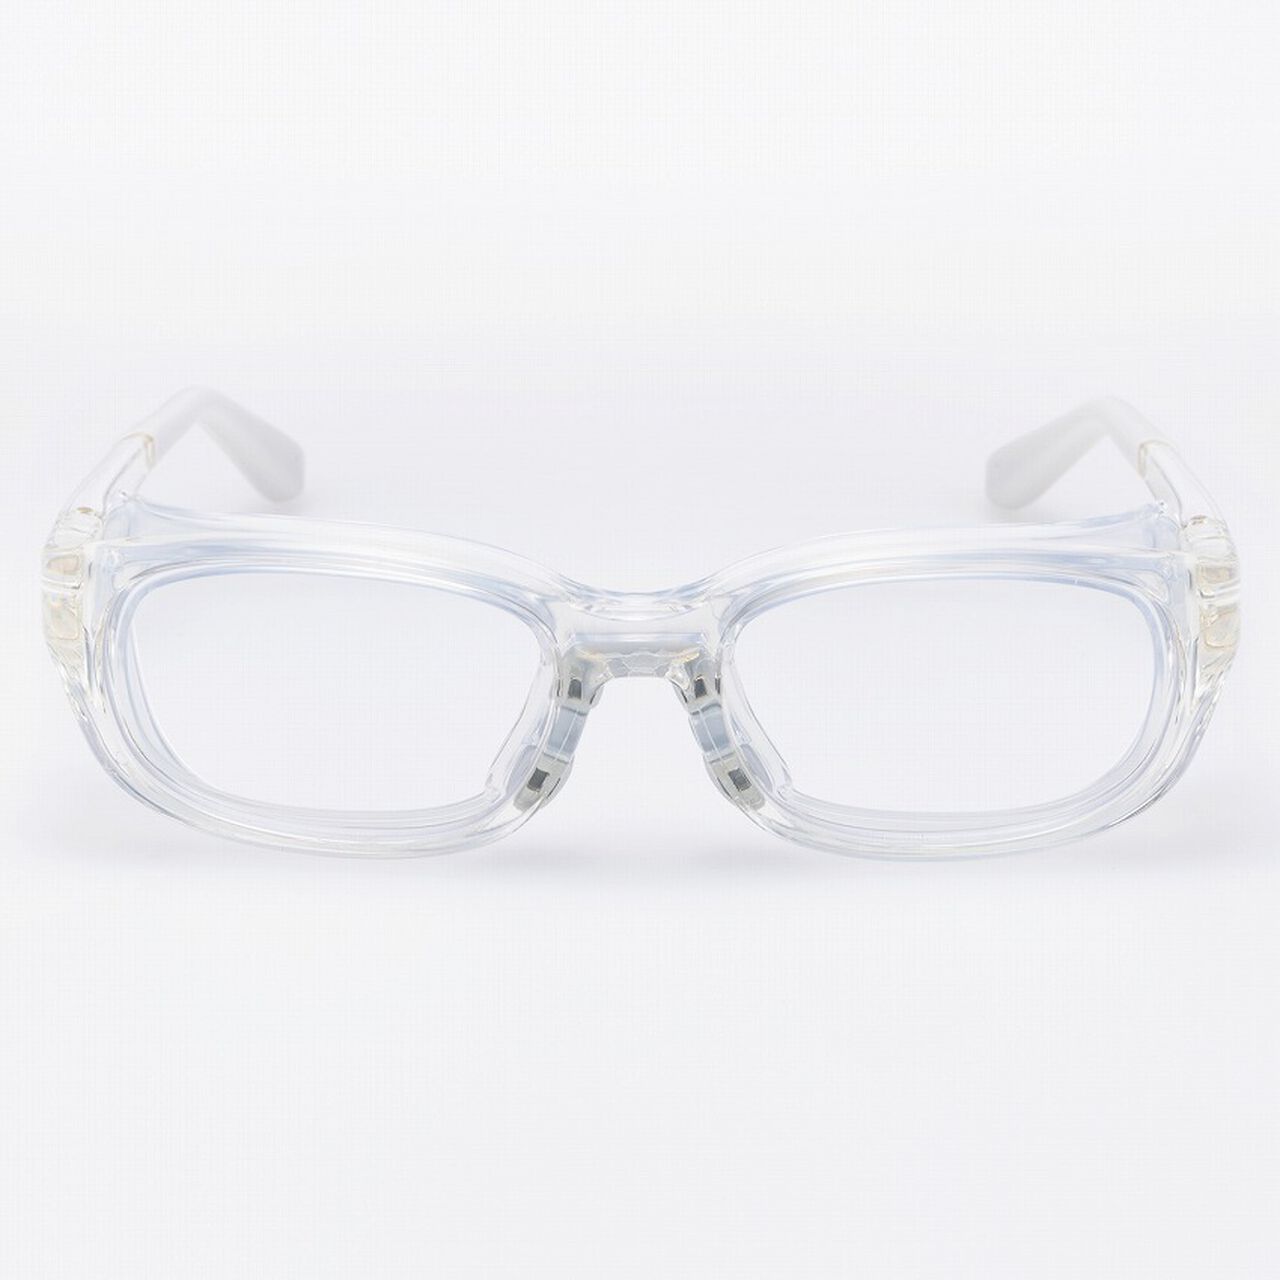 SWKJ AMZ-SWKJ-01 JR Anti-pollen glasses,Opt1, large image number 1